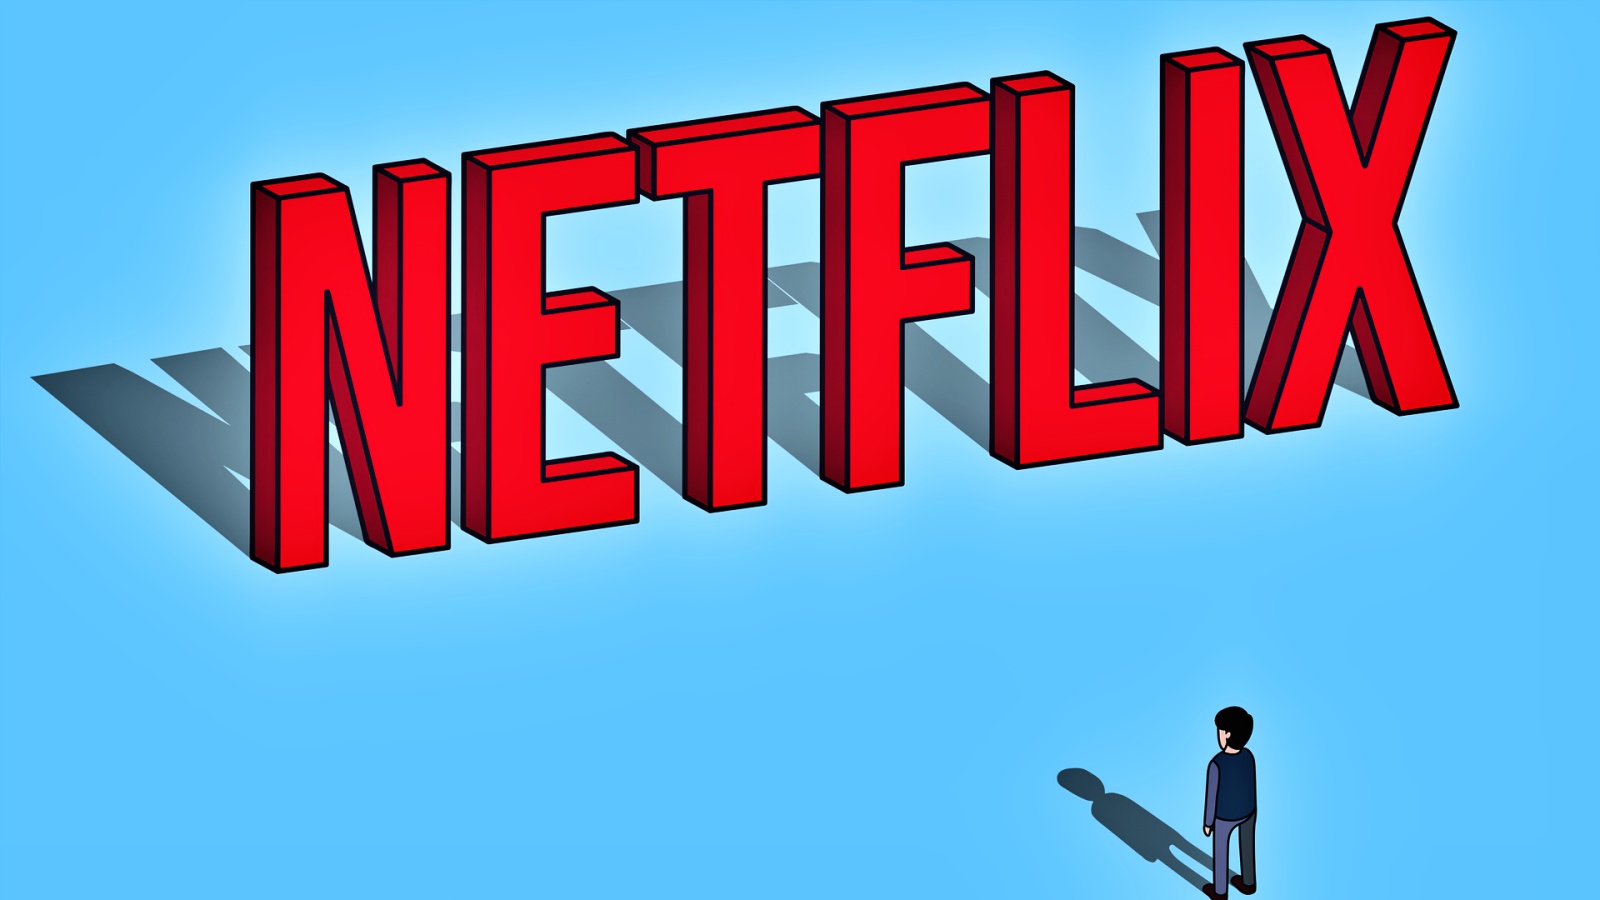 Serialul Popular Netflix Marcat Probleme Mari Productie